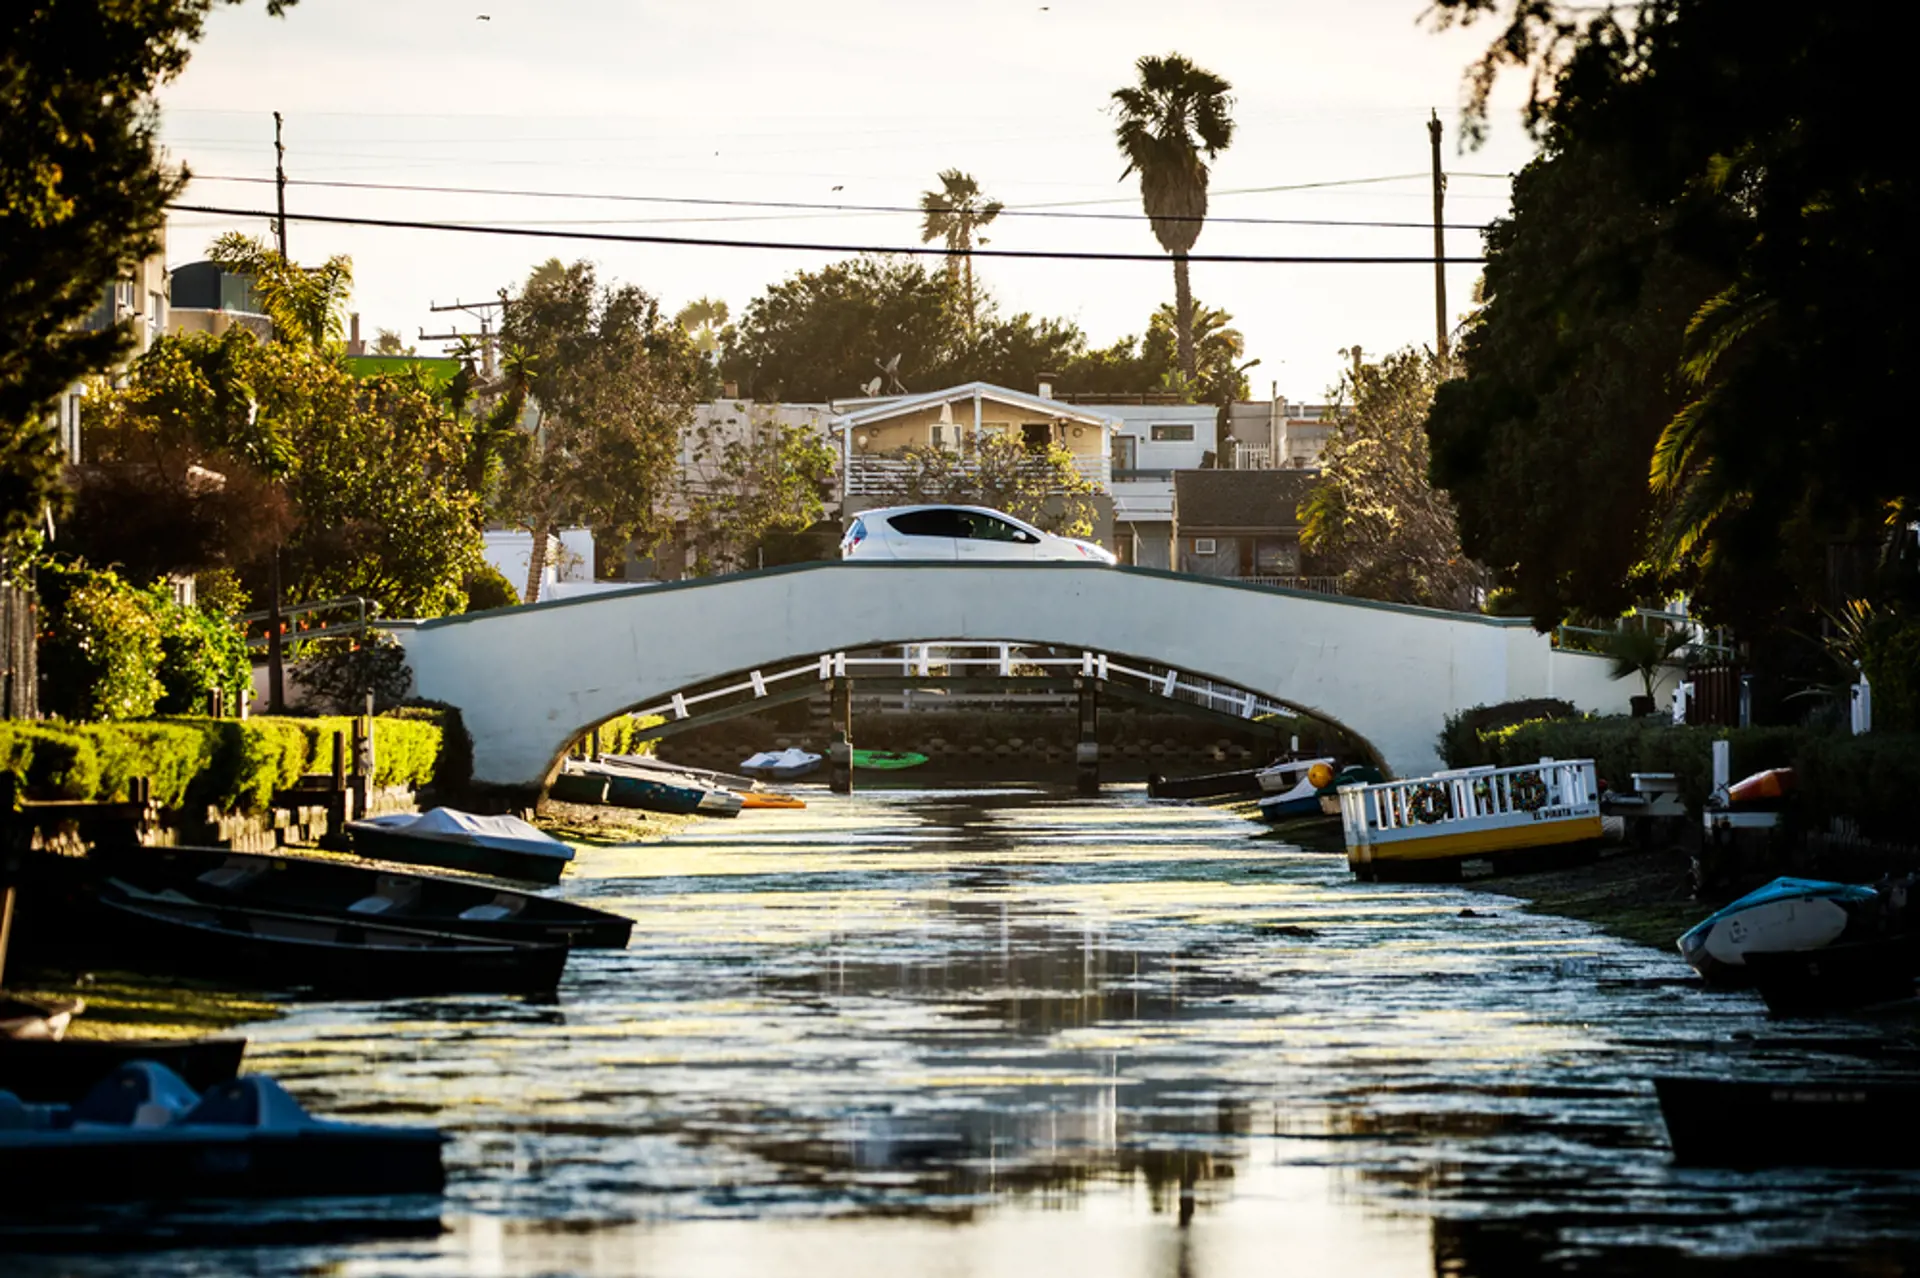 USA - California - Los Angeles - Canals of Venice.jpg